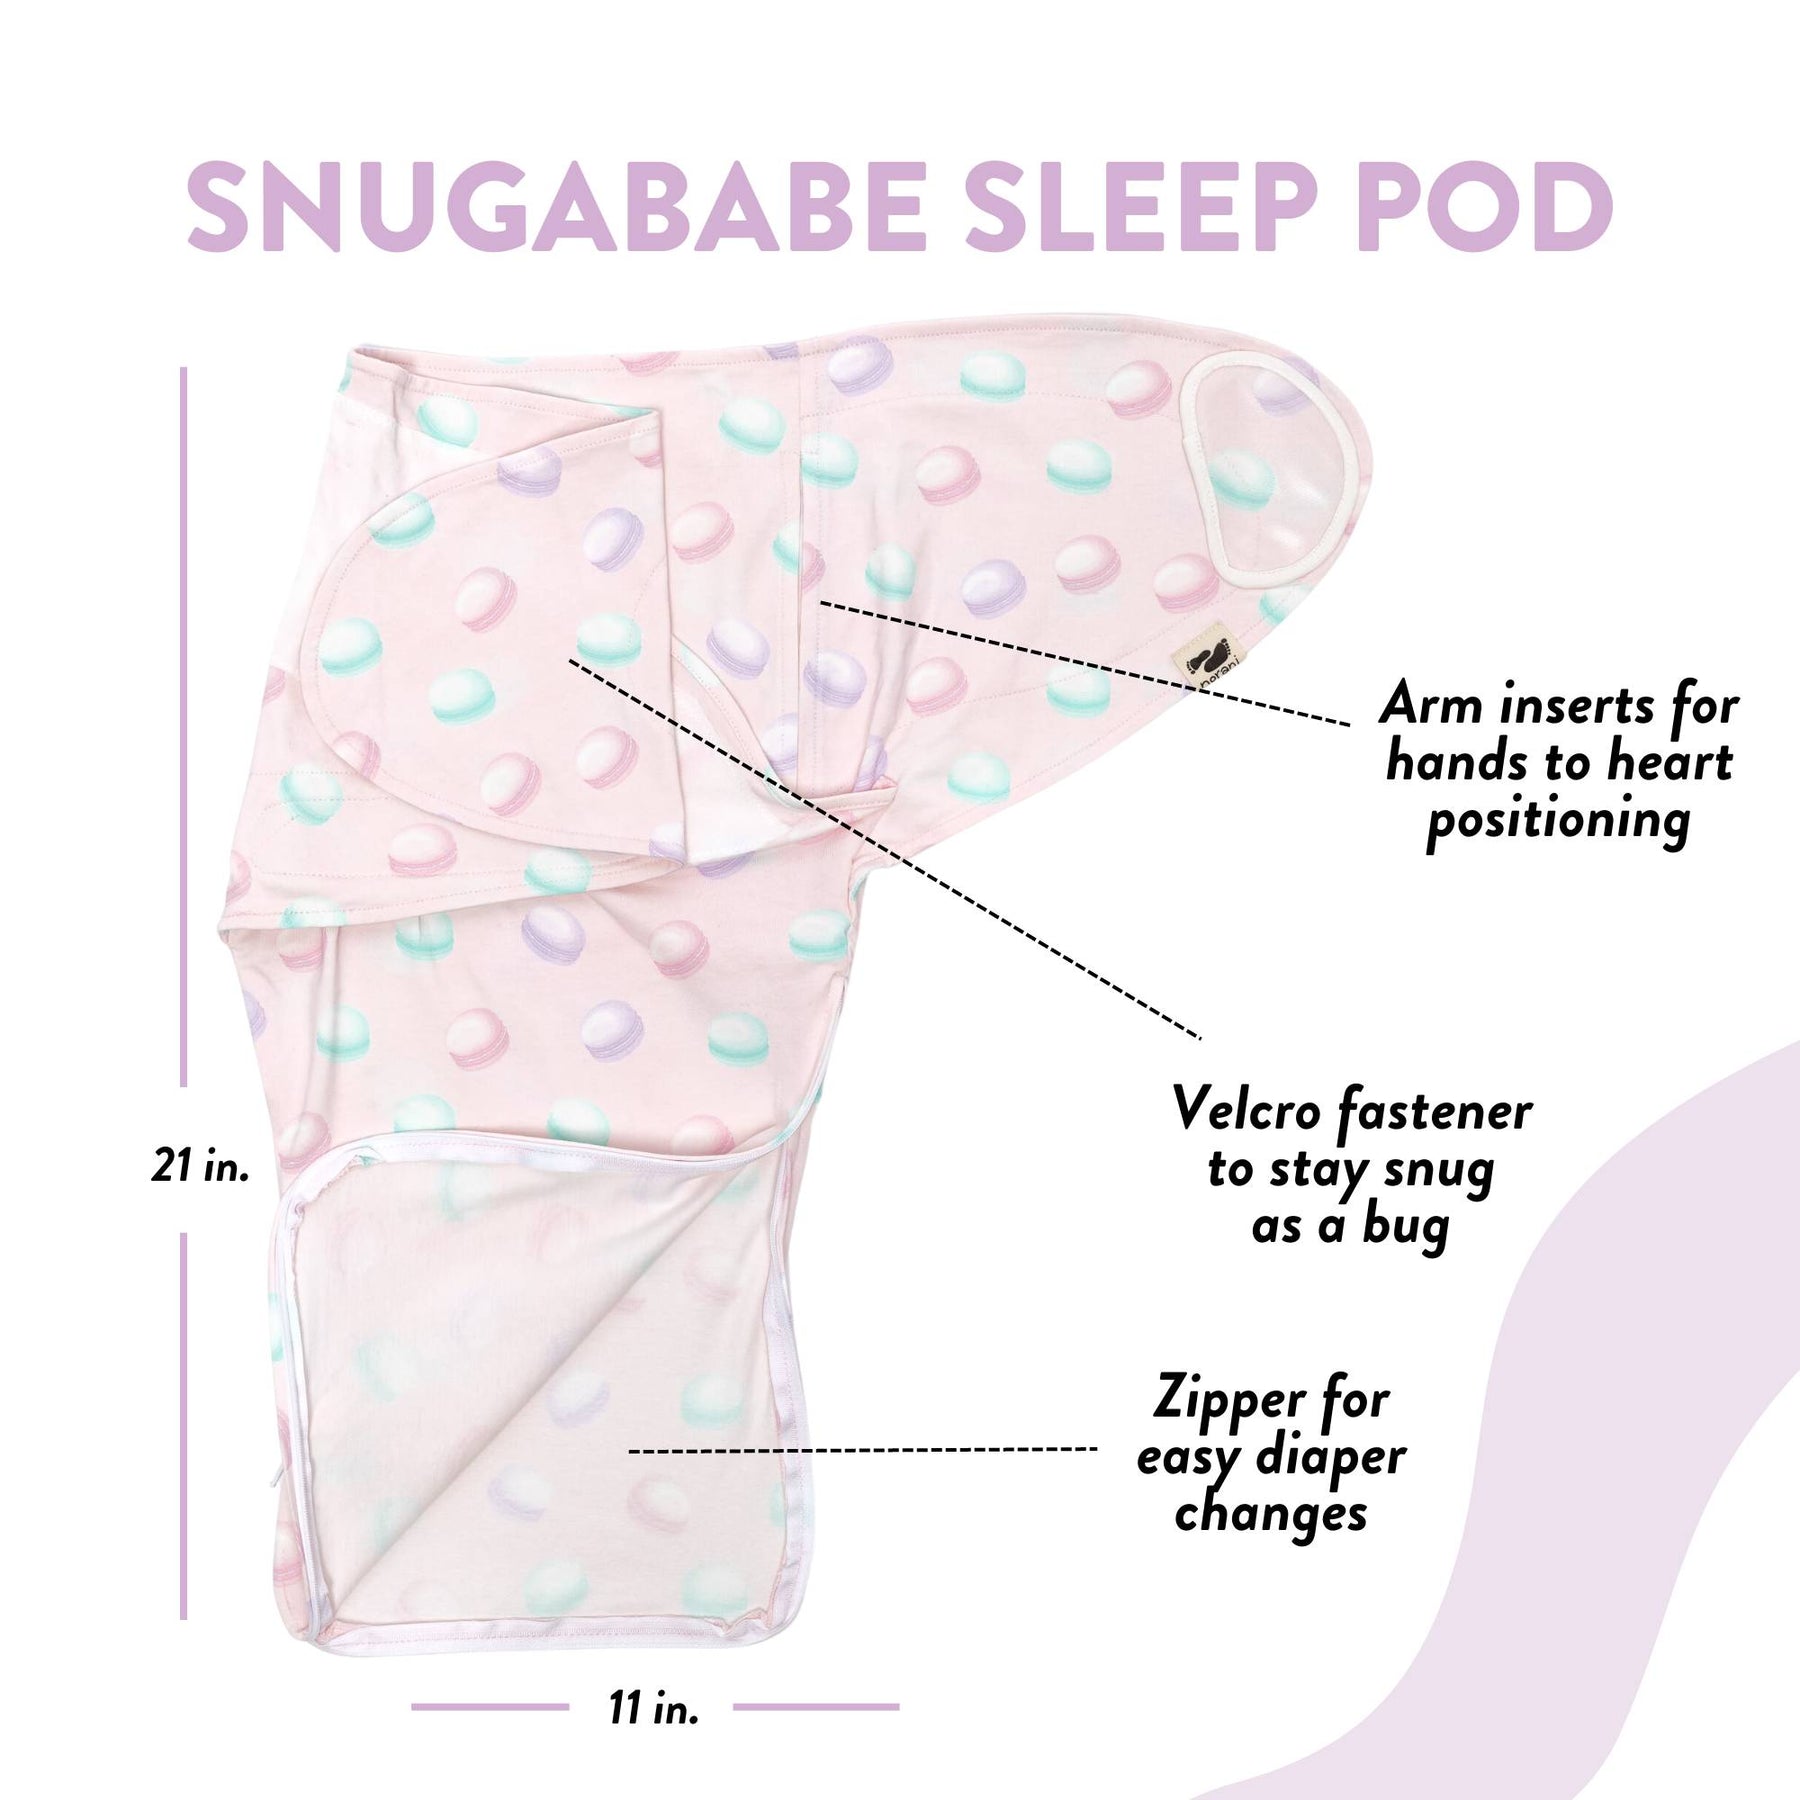 norani baby snugababe sleep pod in pink mint purple macarons cookies